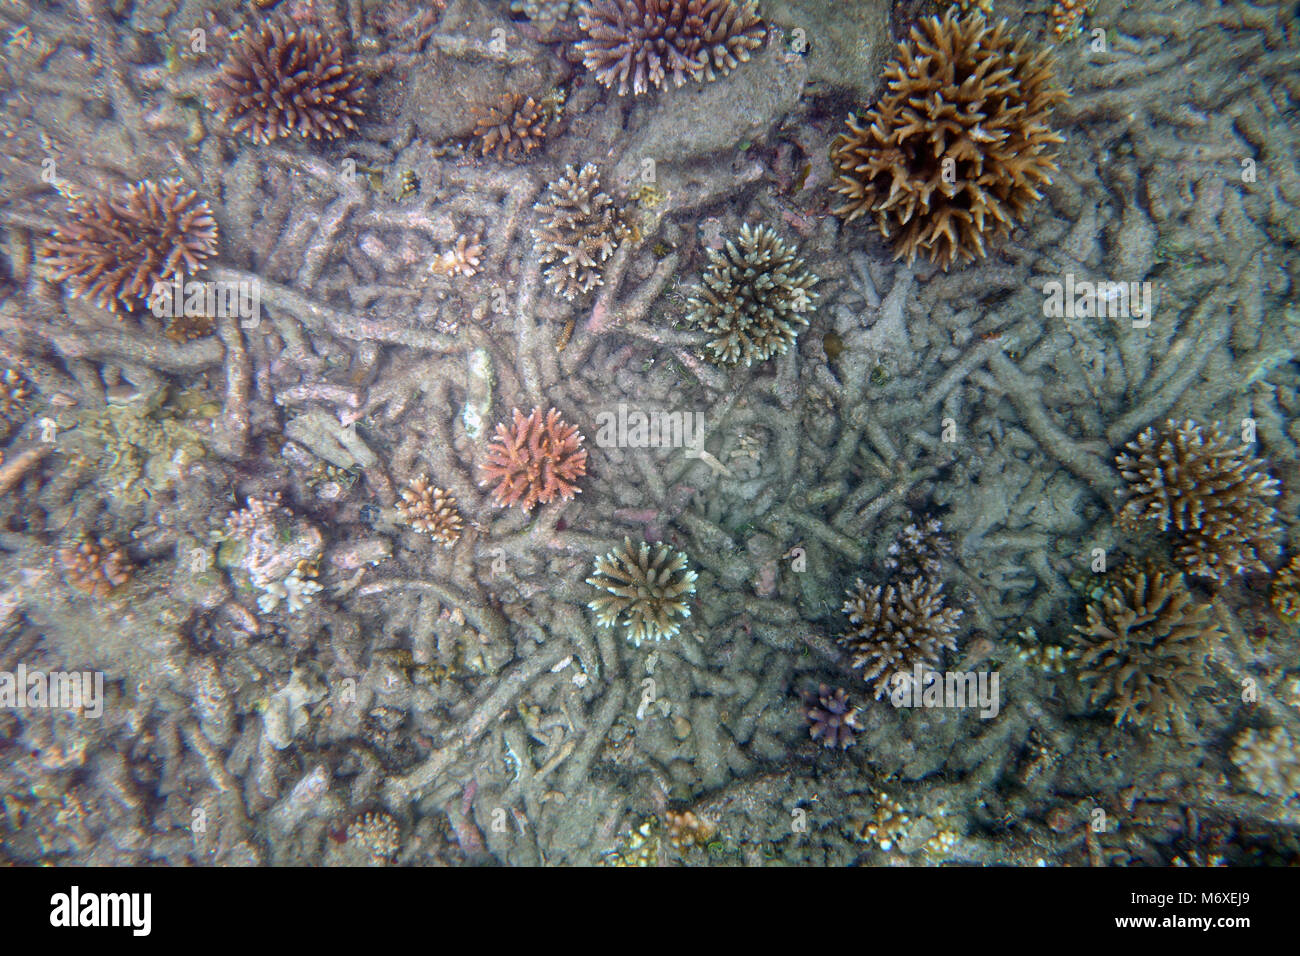 Viele kleine Coral Kolonien unter toten Korallen Schutt rekrutieren, Fitzroy Island, Great Barrier Reef, Queensland, Australien Stockfoto